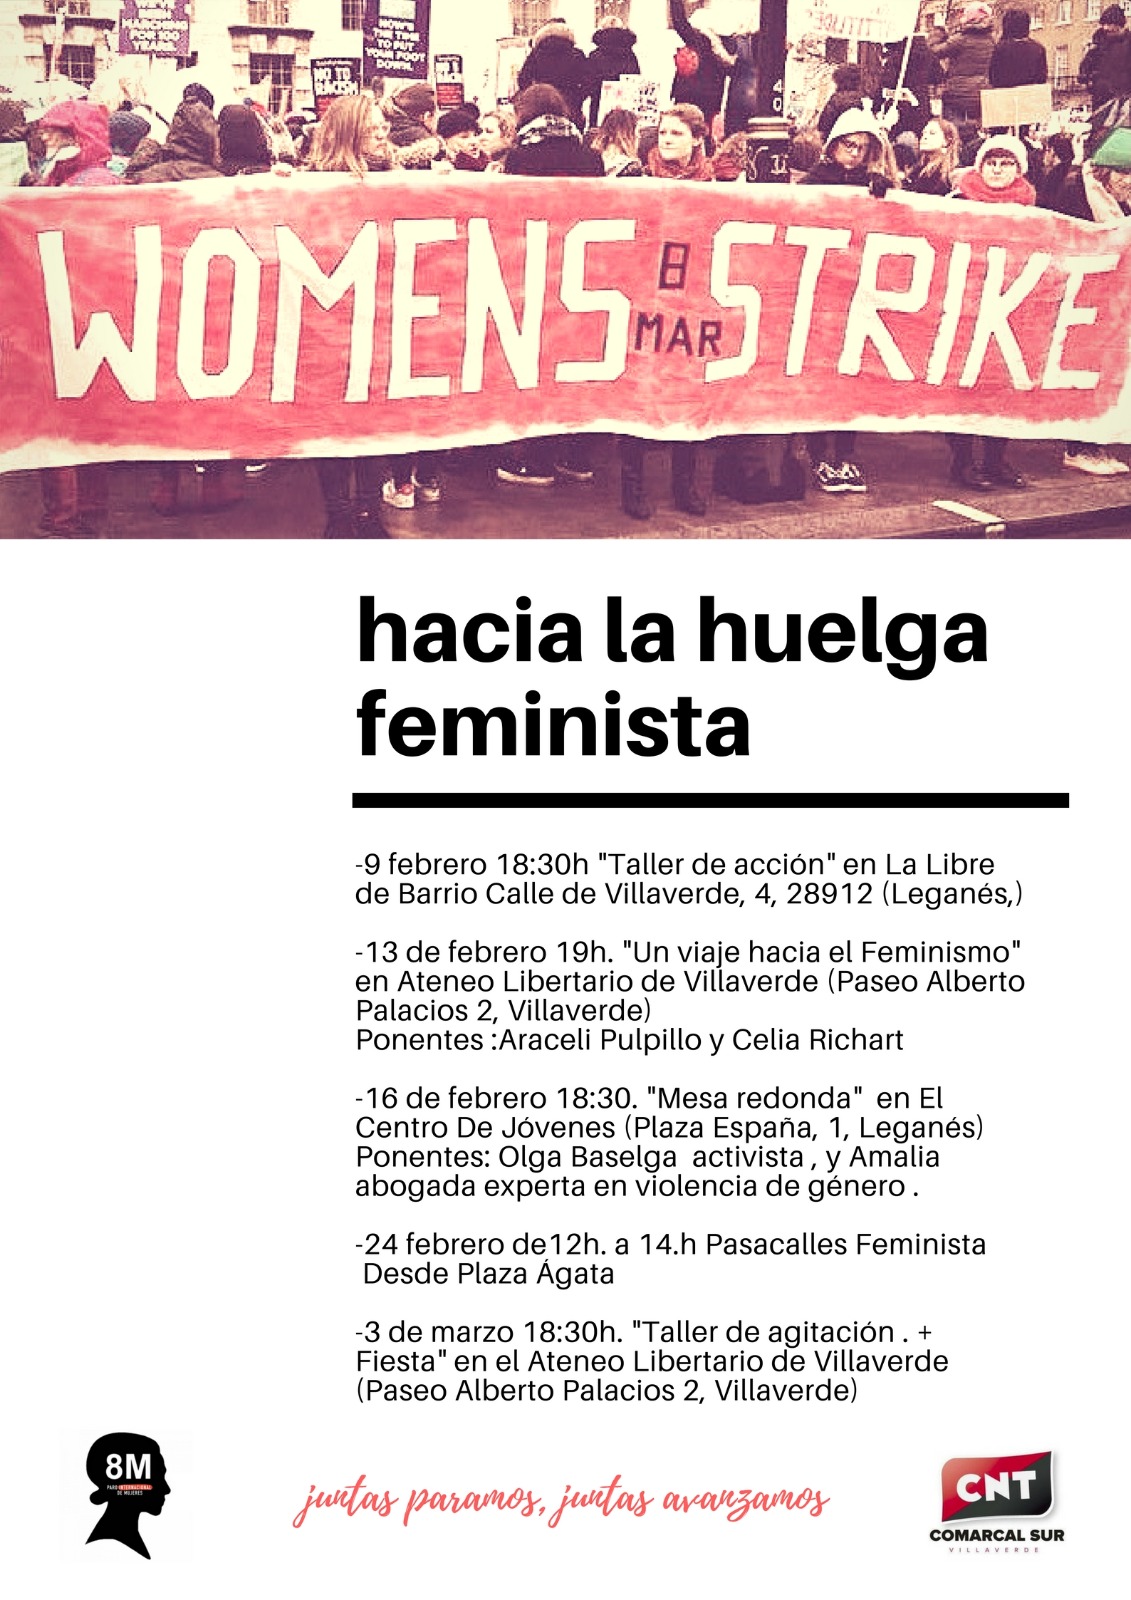 CNT Comarcal Sur se mueve hacia la huelga feminista